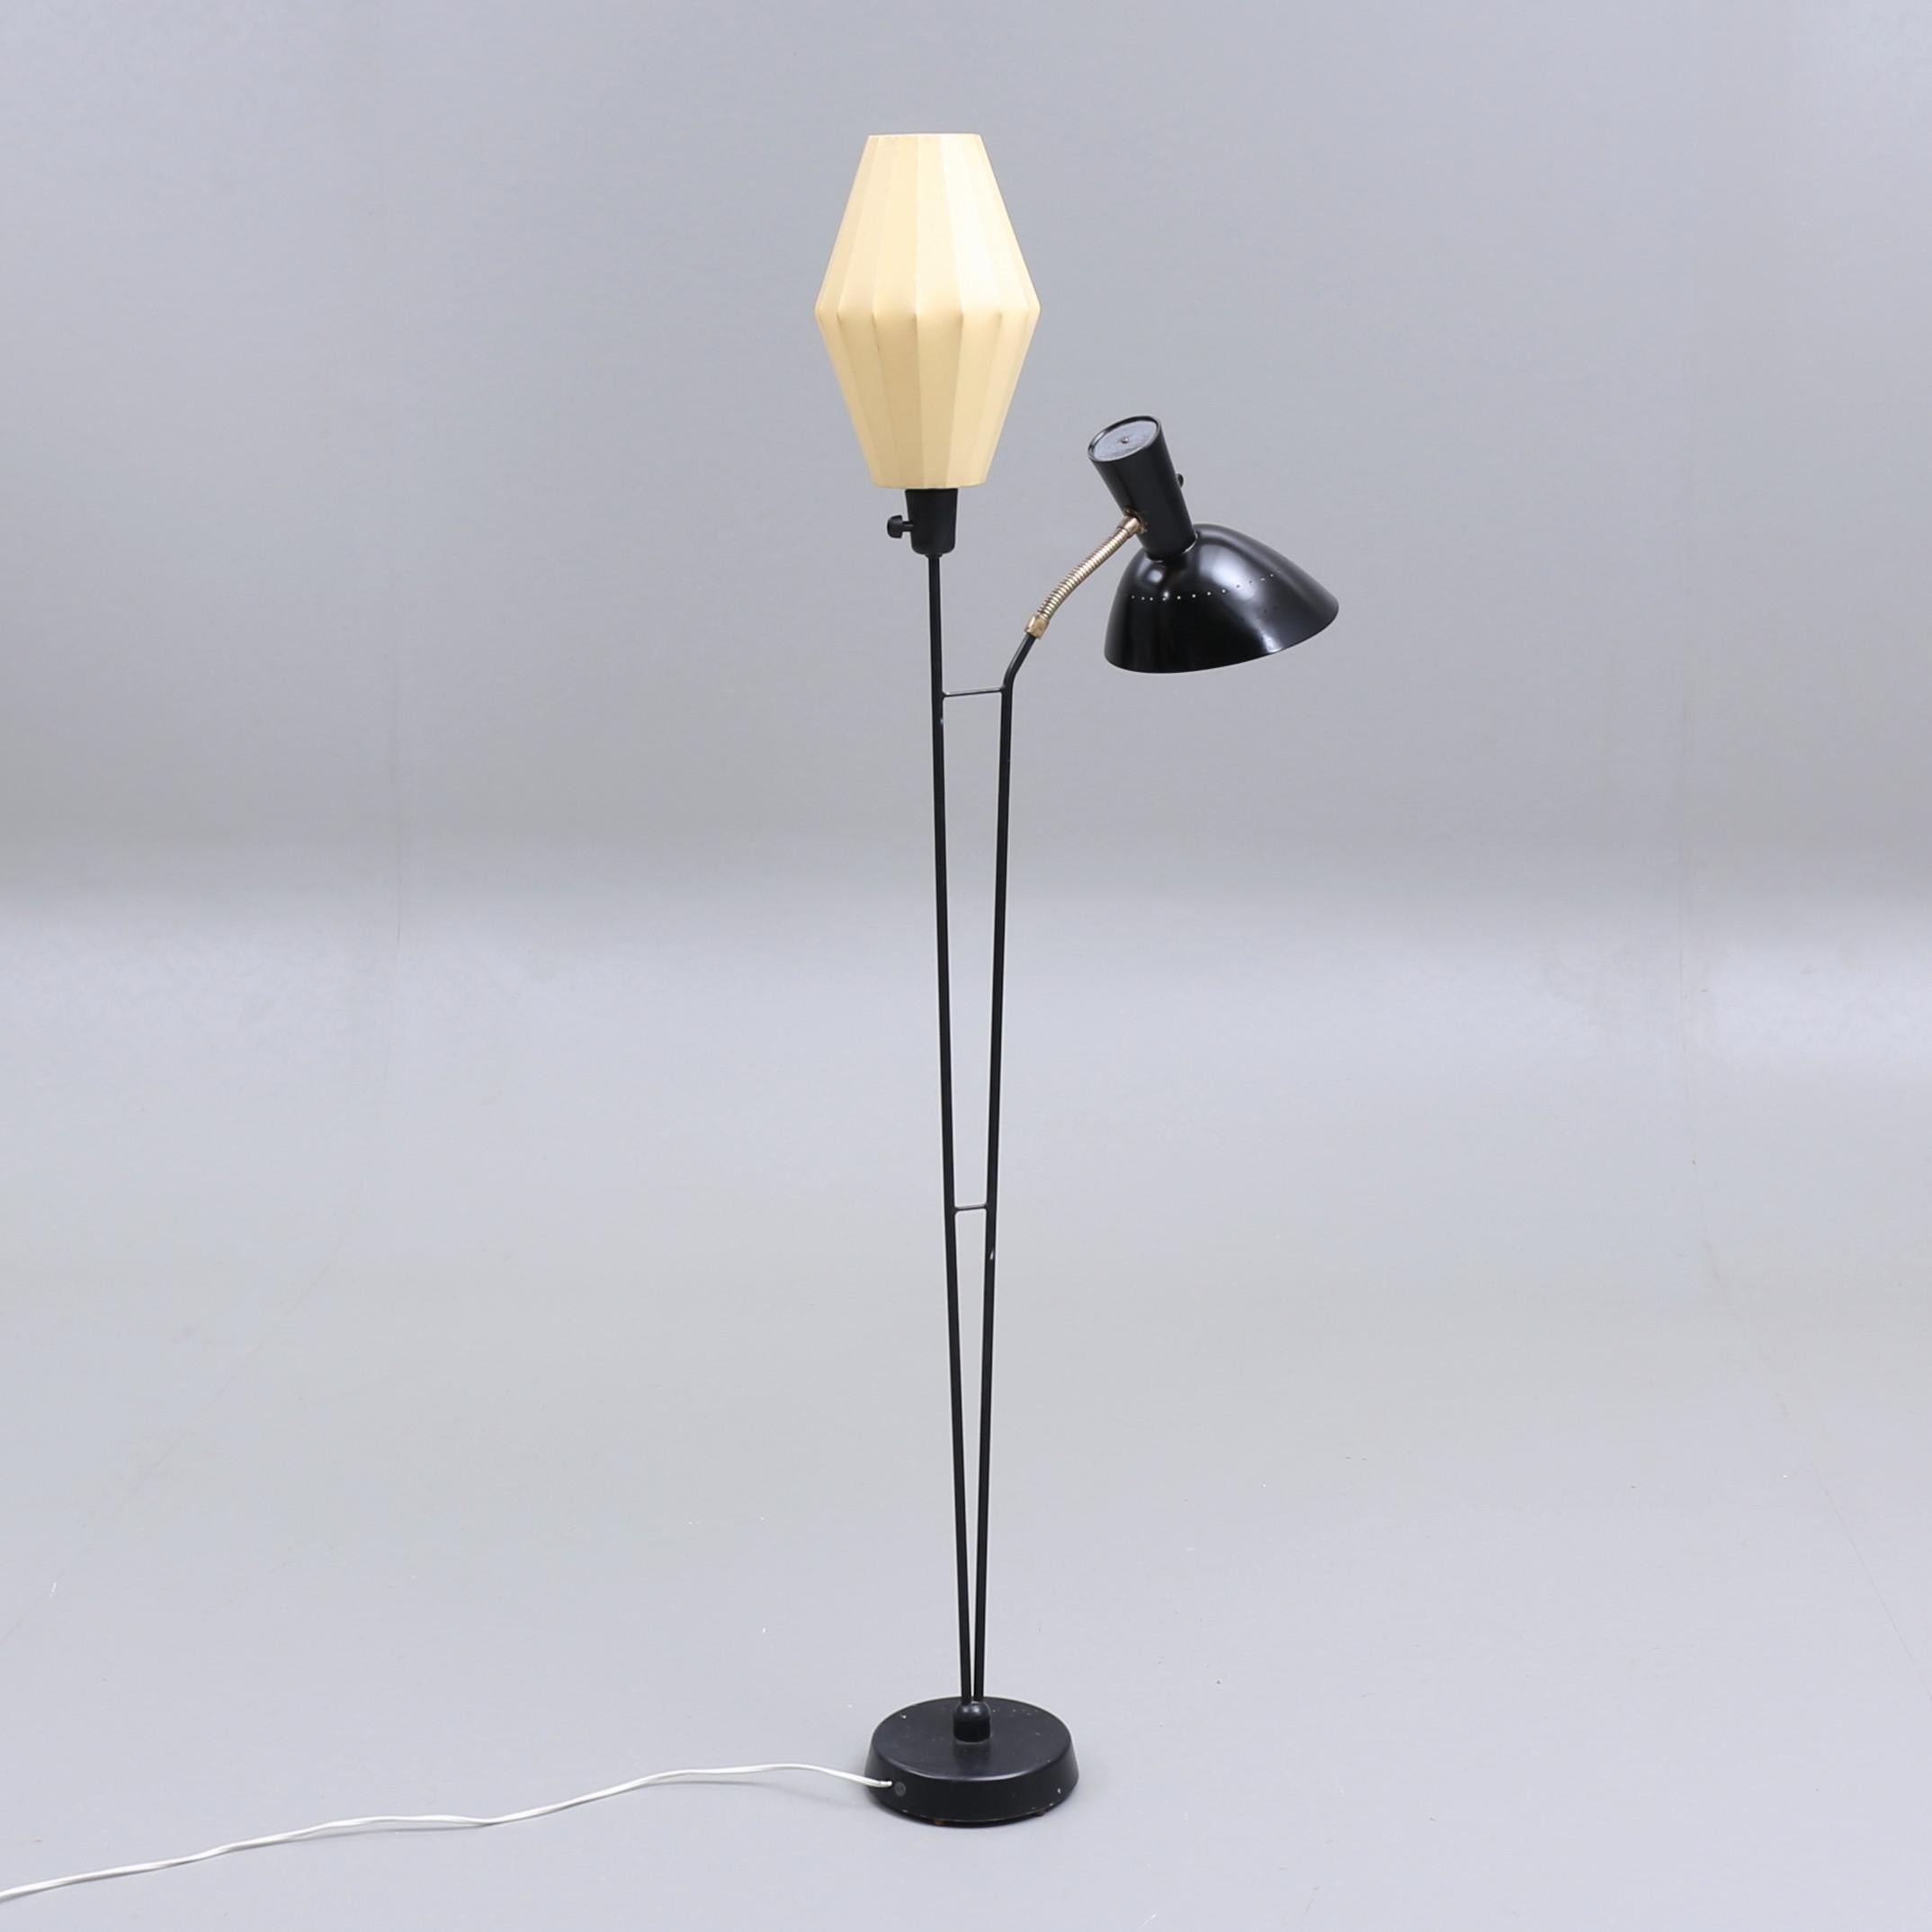 Scandinavian Modern Rare Floor Lamp by Hans Bergström for Ateljé Lyktan from the 1950s For Sale